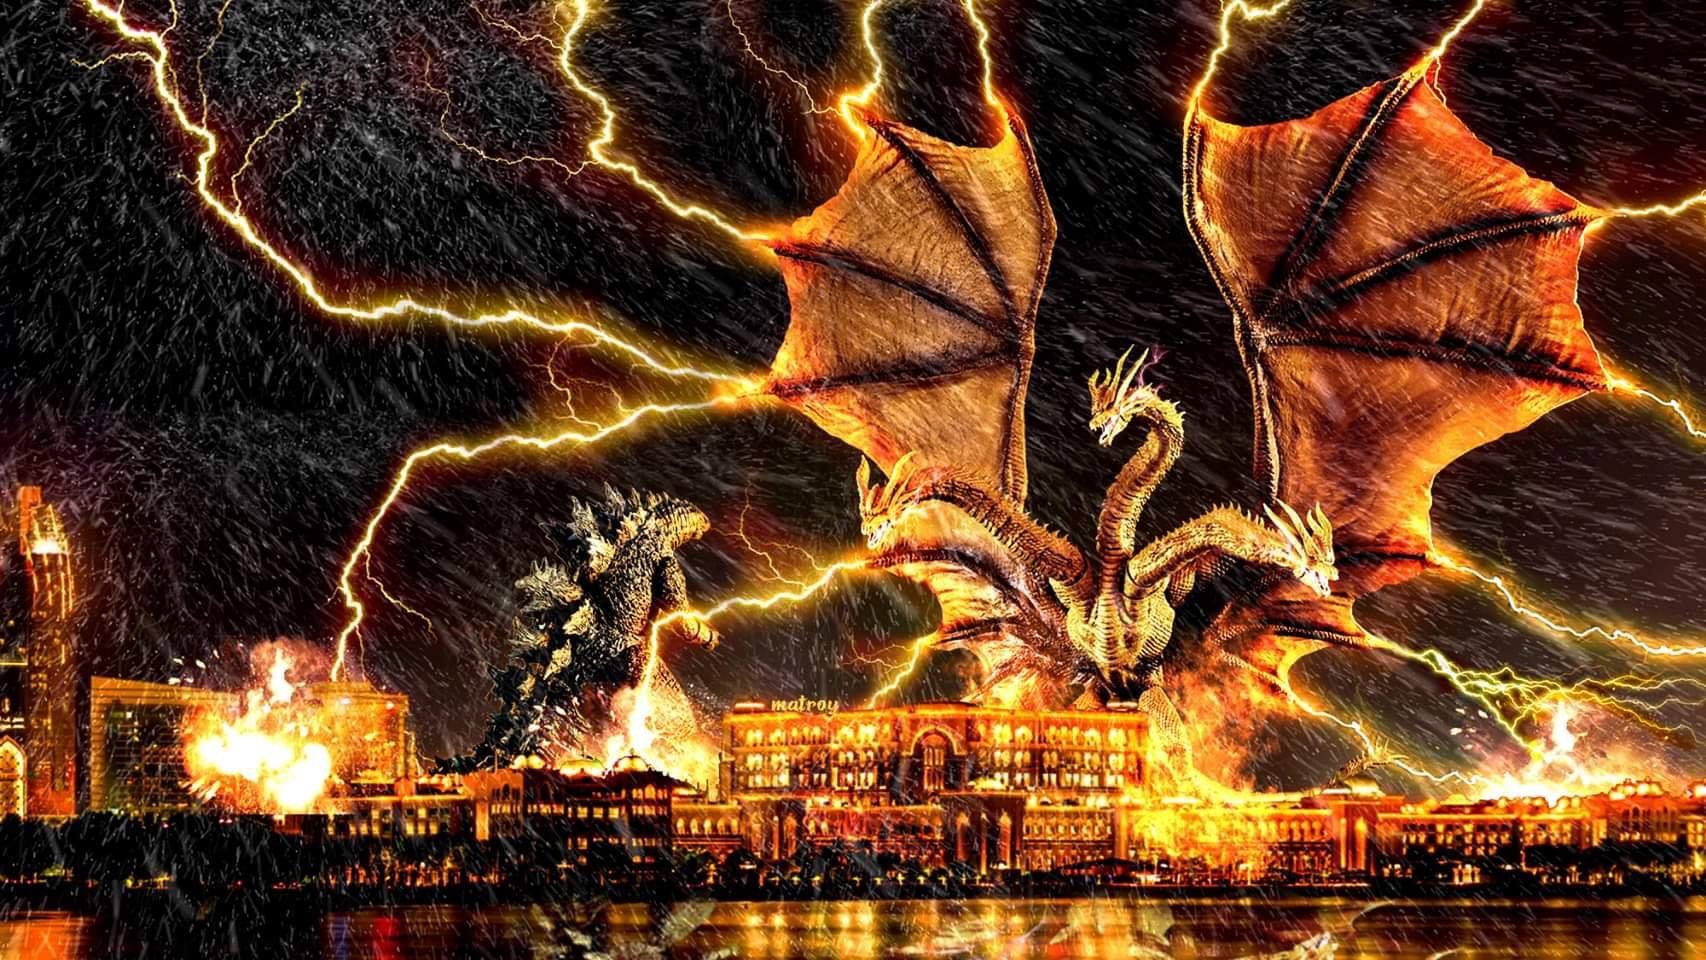 Long Live The King Godzilla Fan Artwork Image Gallery - 